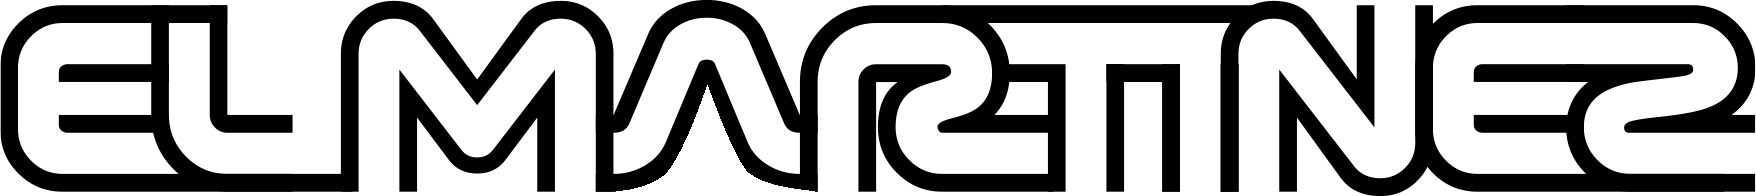 elmartinez logo.png